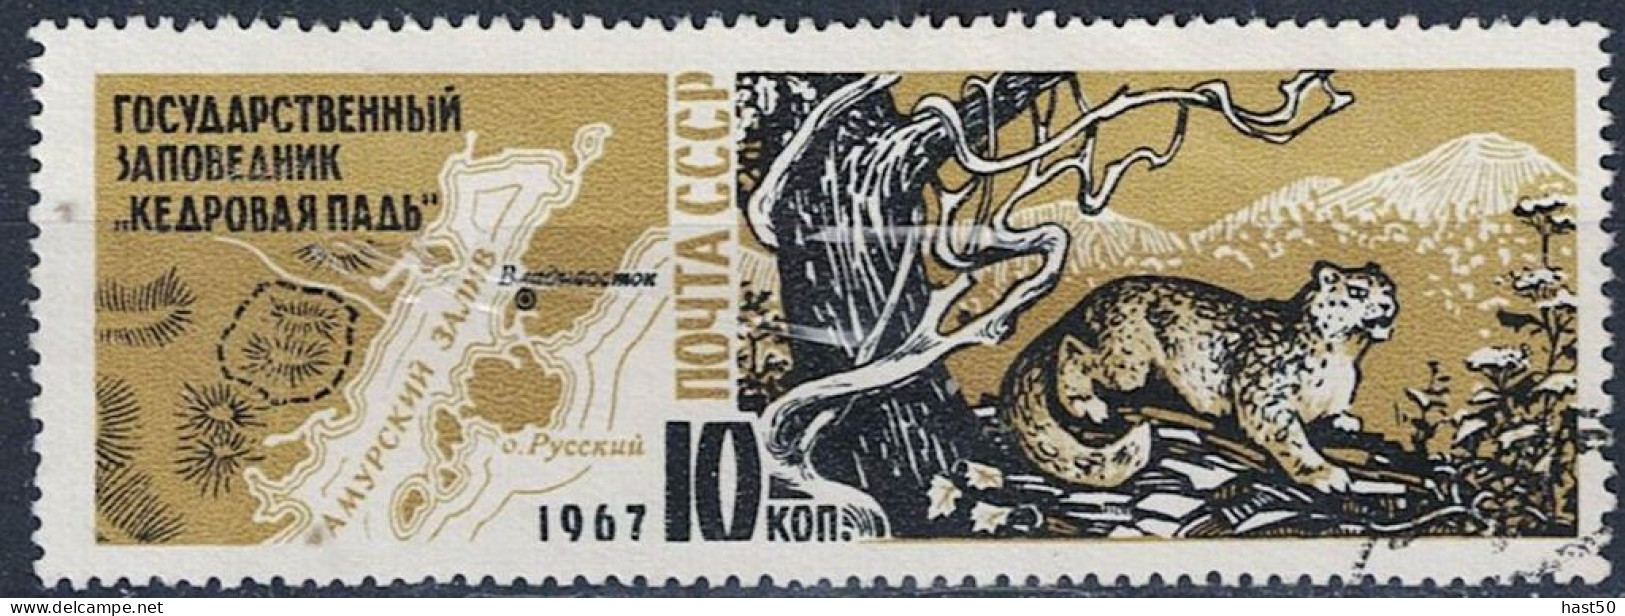 Sowjetunion UdSSR - Schneeleopard (Panthera Uncia) Vor Gebirgslandschaft (MiNr. 3400) 1967 - Gest Used Obl - Gebraucht